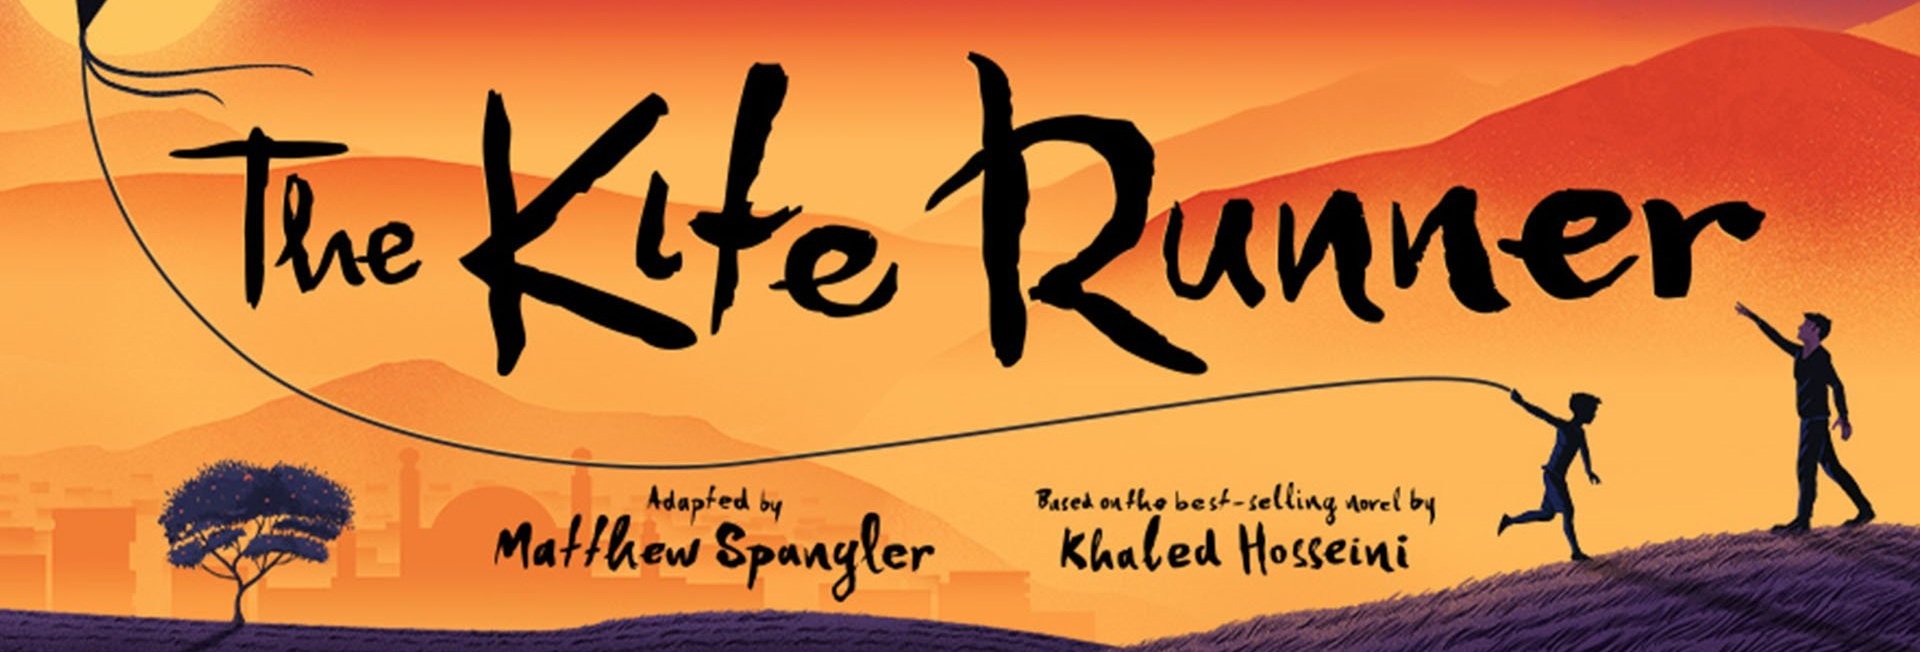  UPCOMING:  The Kite Runner -  Broadway National Tour 